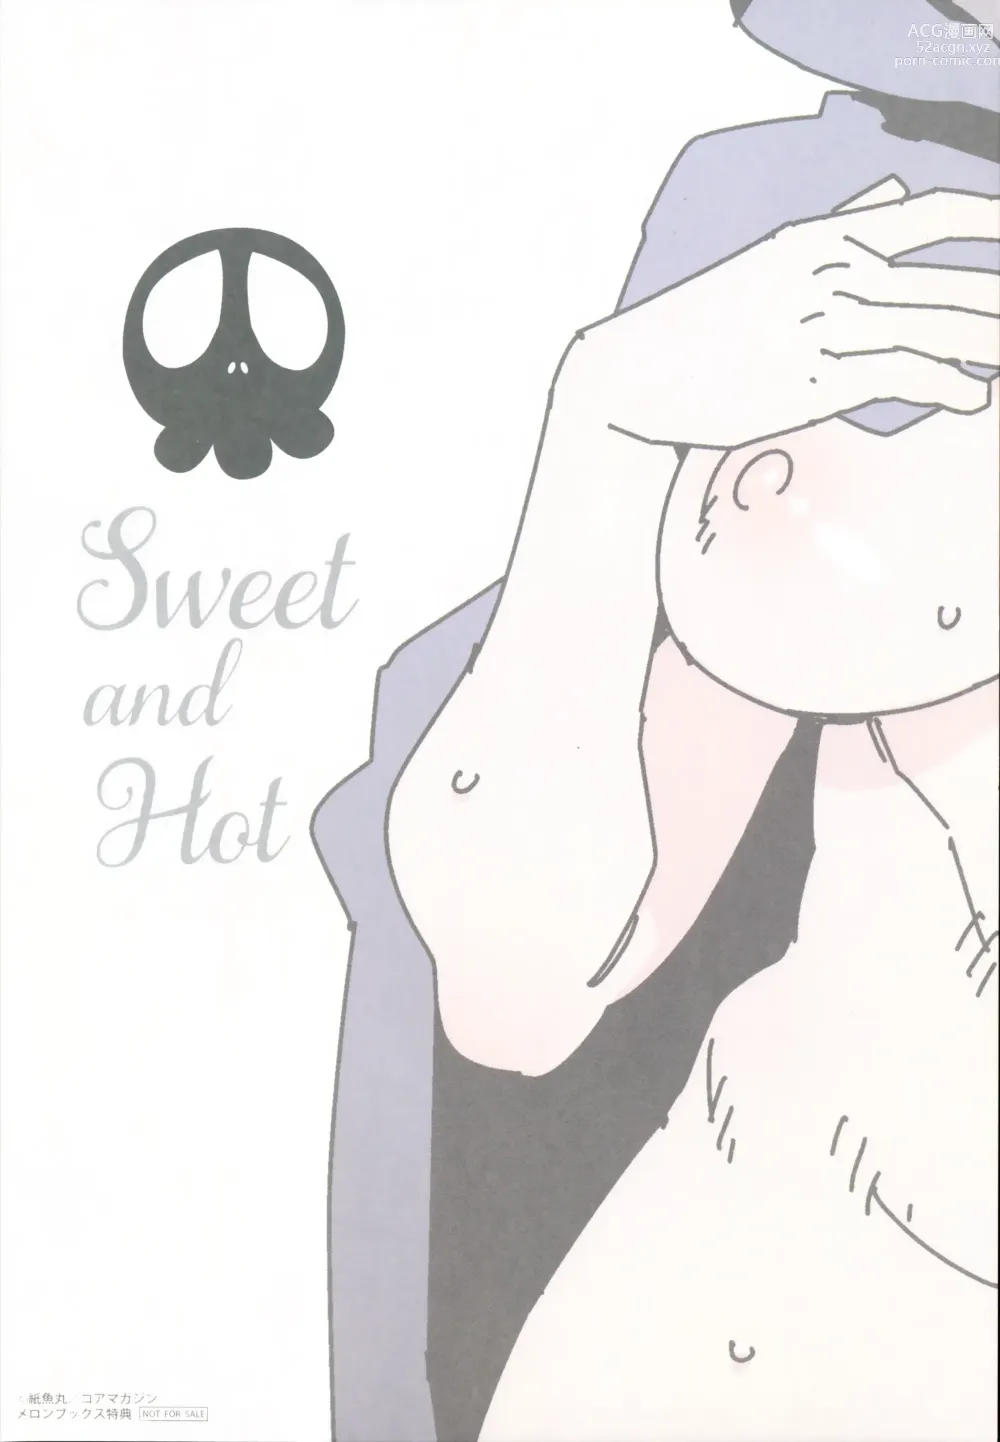 Page 229 of manga Sweet and Hot + Melonbooks Tokuten Manga Leaflet